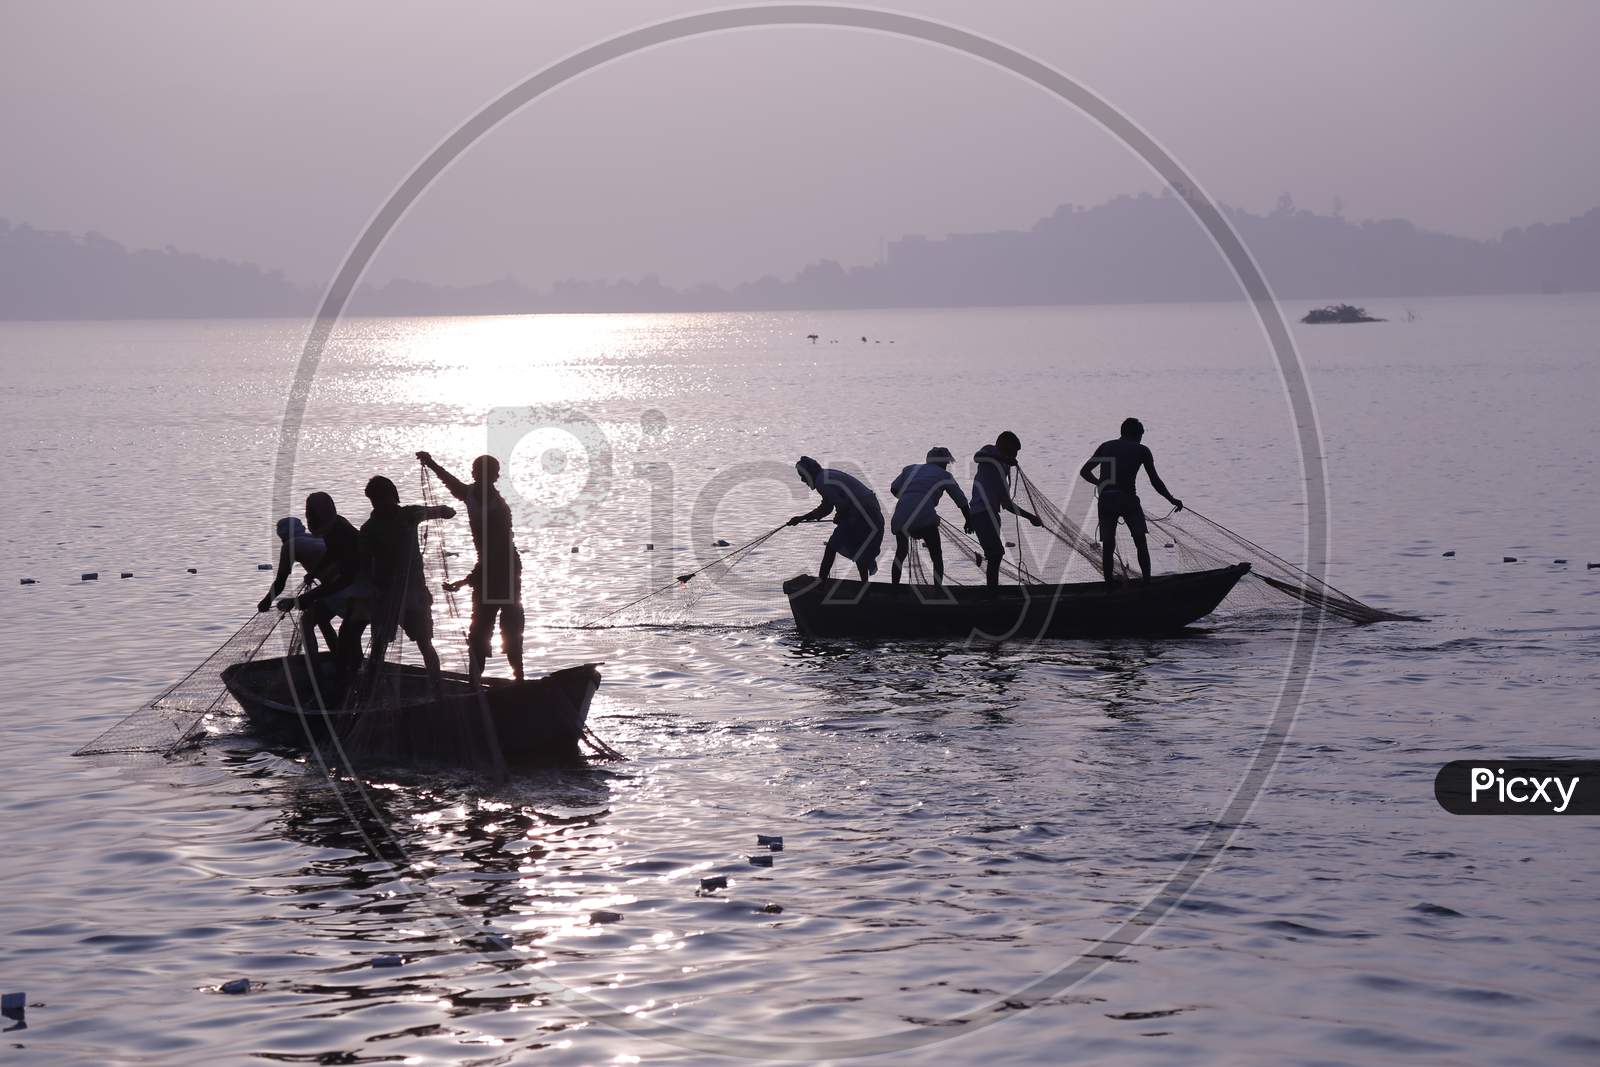 Indian Fishermen Catch Fishes In Anasagar Lake In Ajmer, Rajasthan, India.